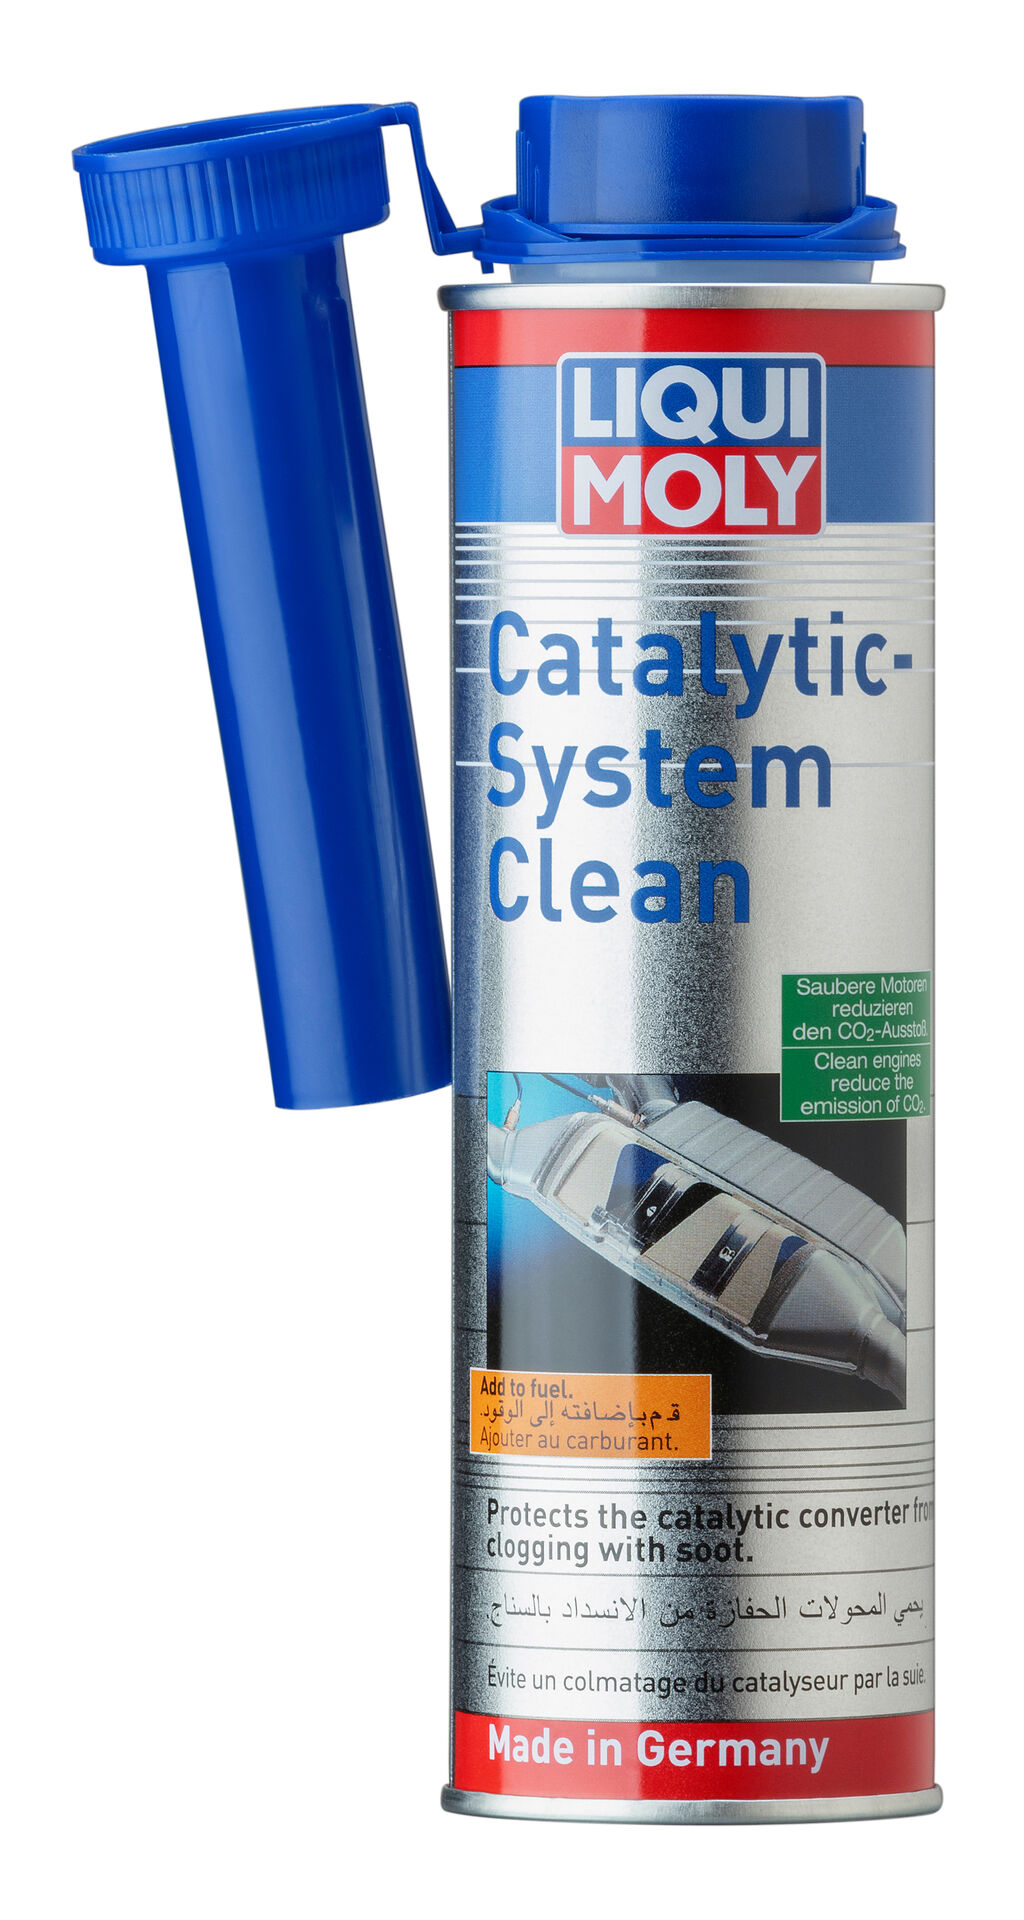 Catalytic converter cleaner